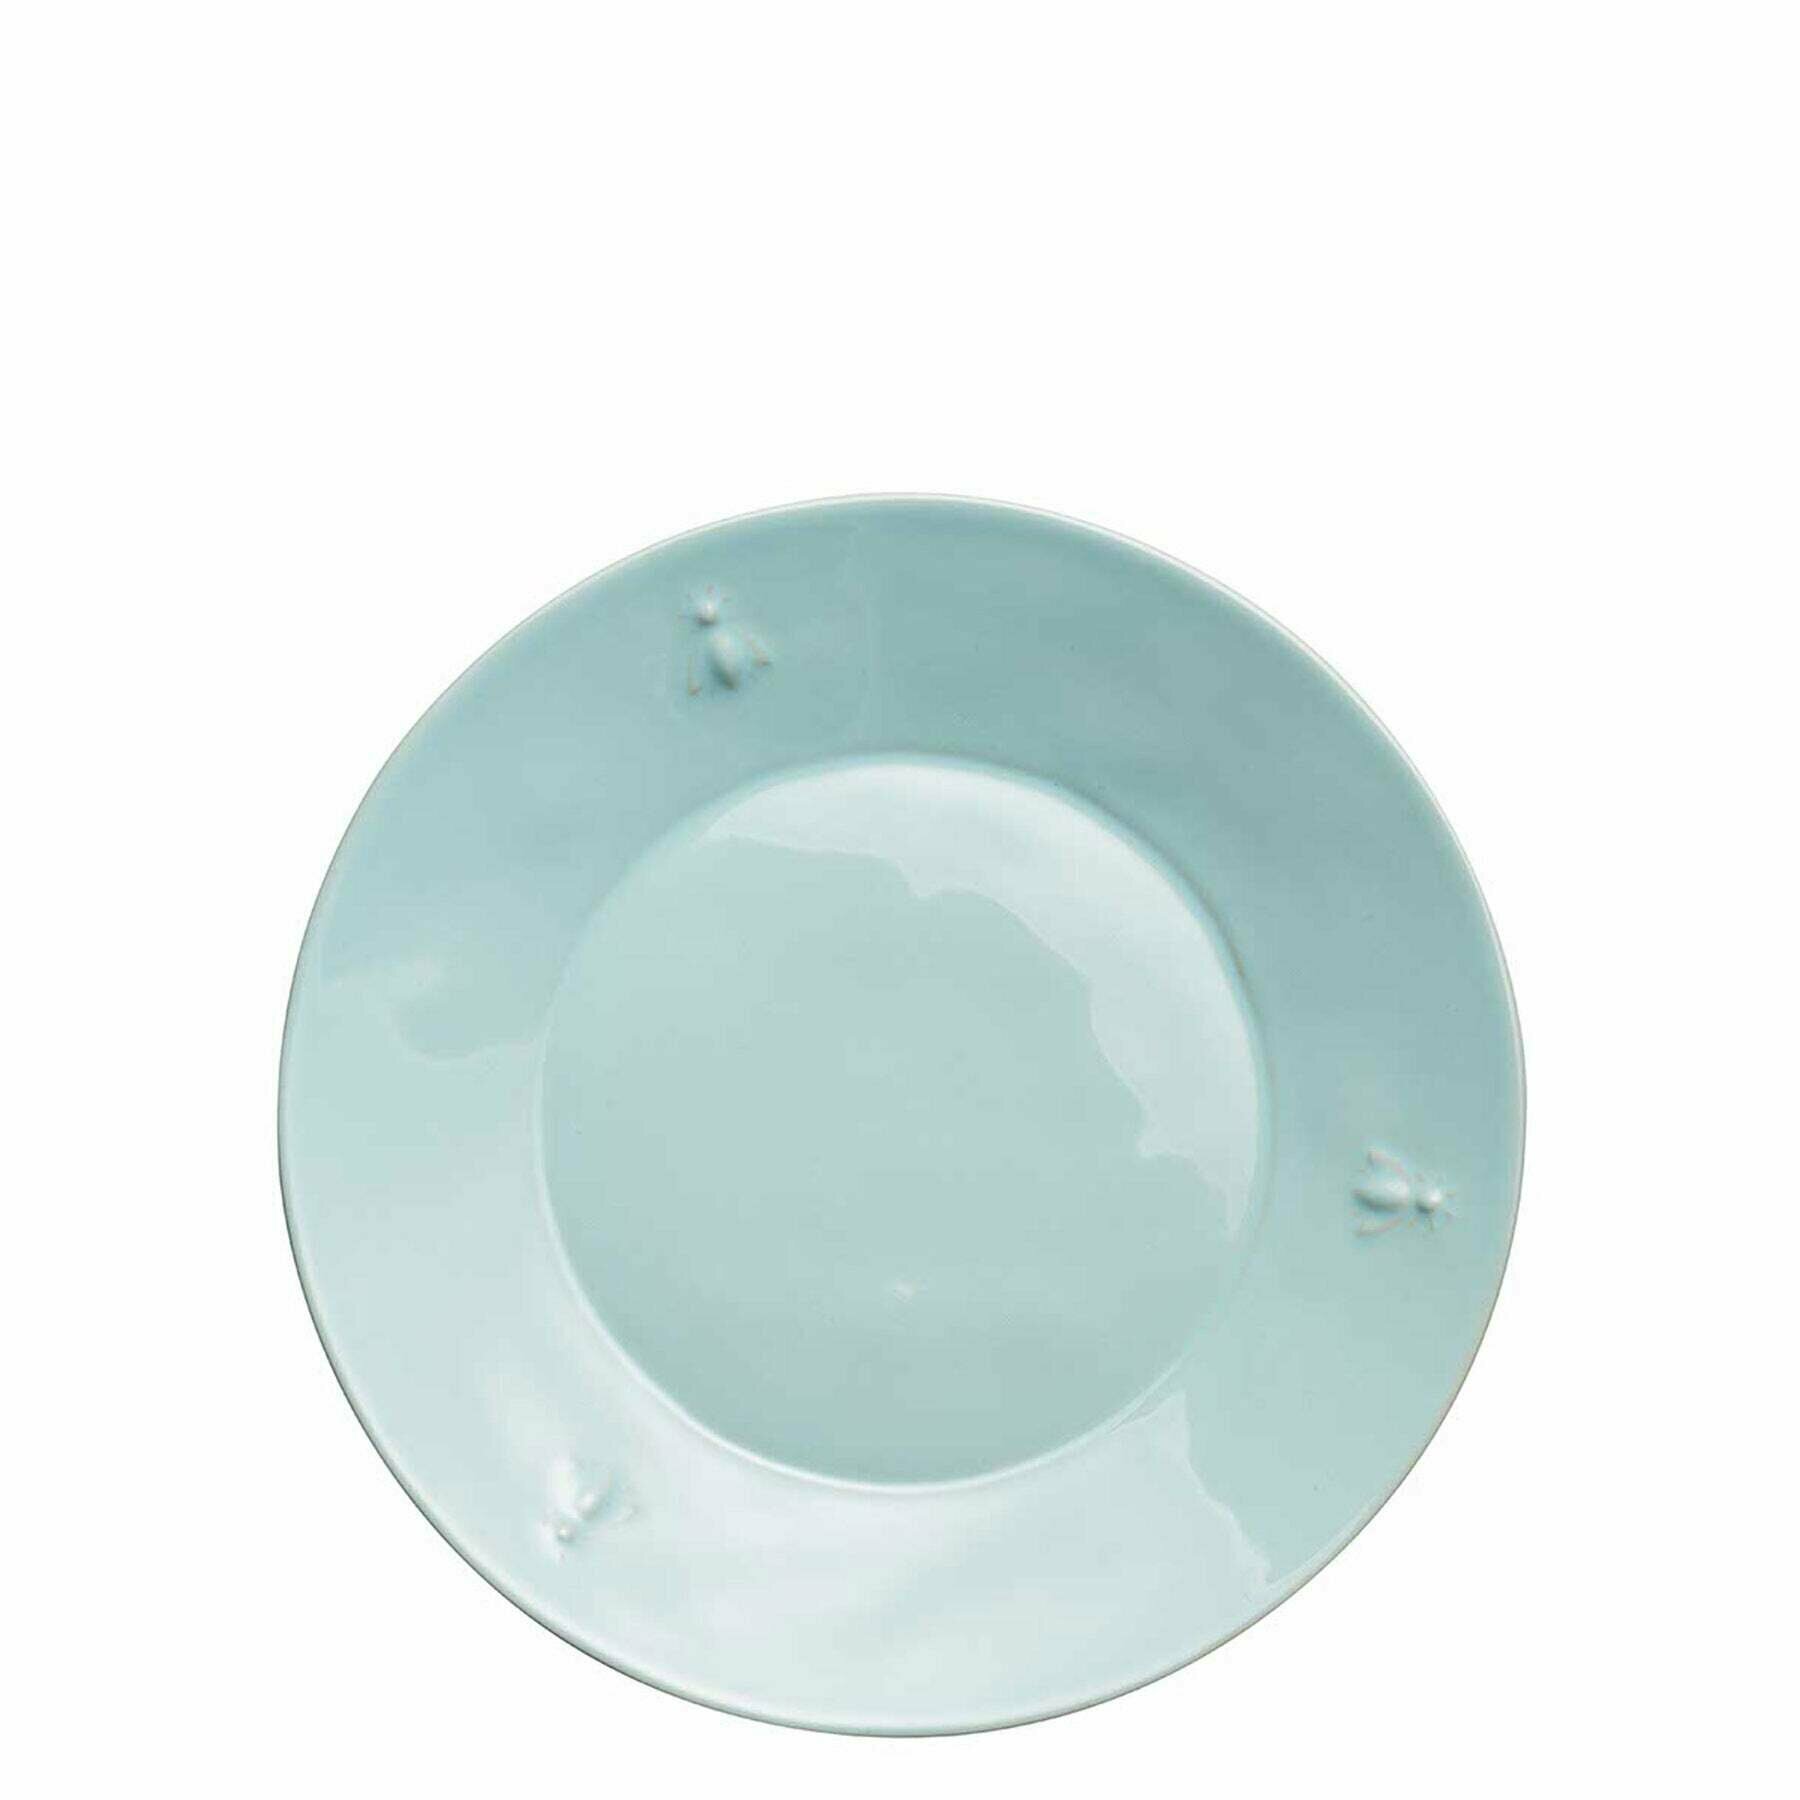 Тарелка d 27,4 см, керамика, цвет голубой, CERAMIQUE ABEILLE